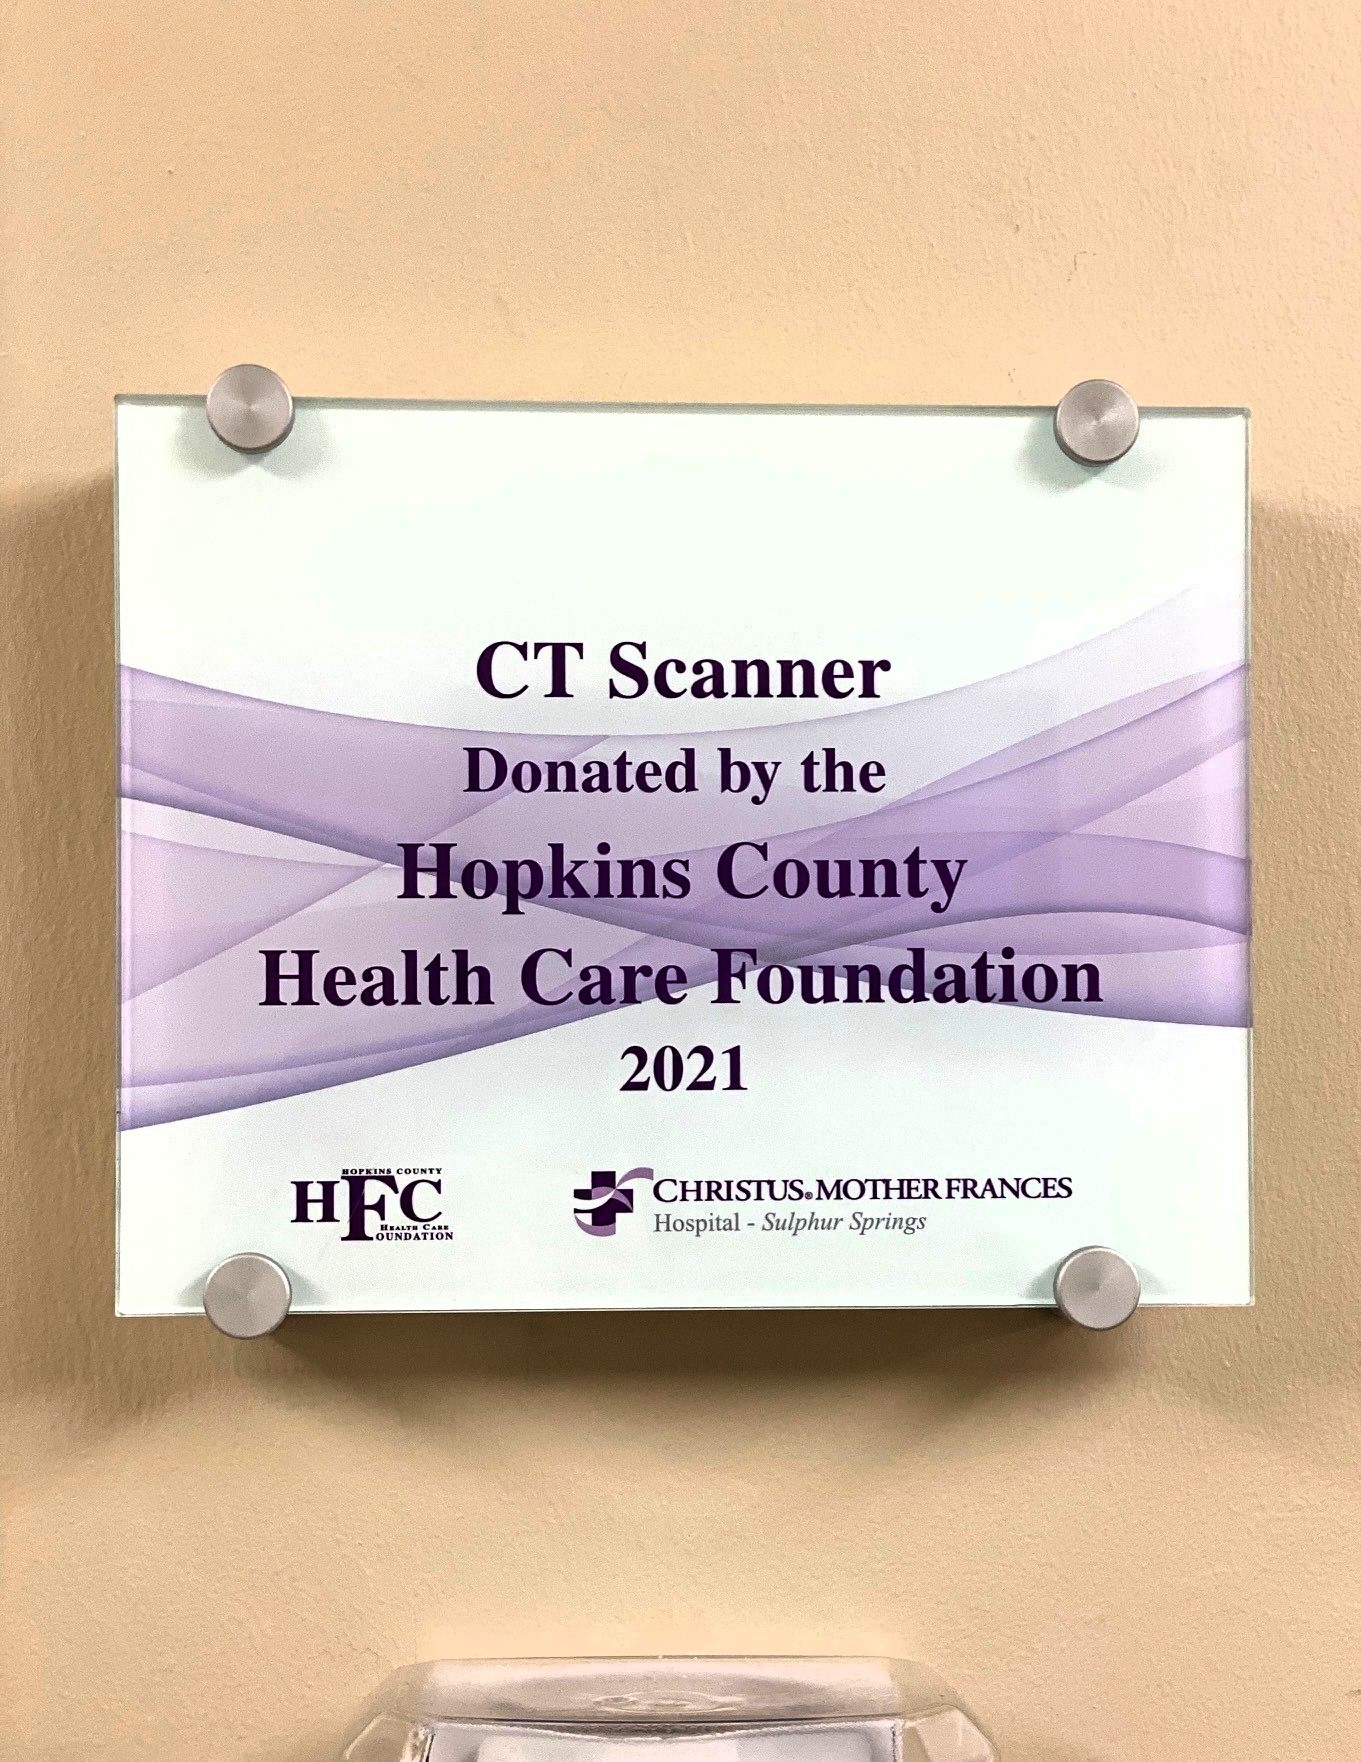 New CT Scanner Added At CHRISTUS In Sulphur Springs